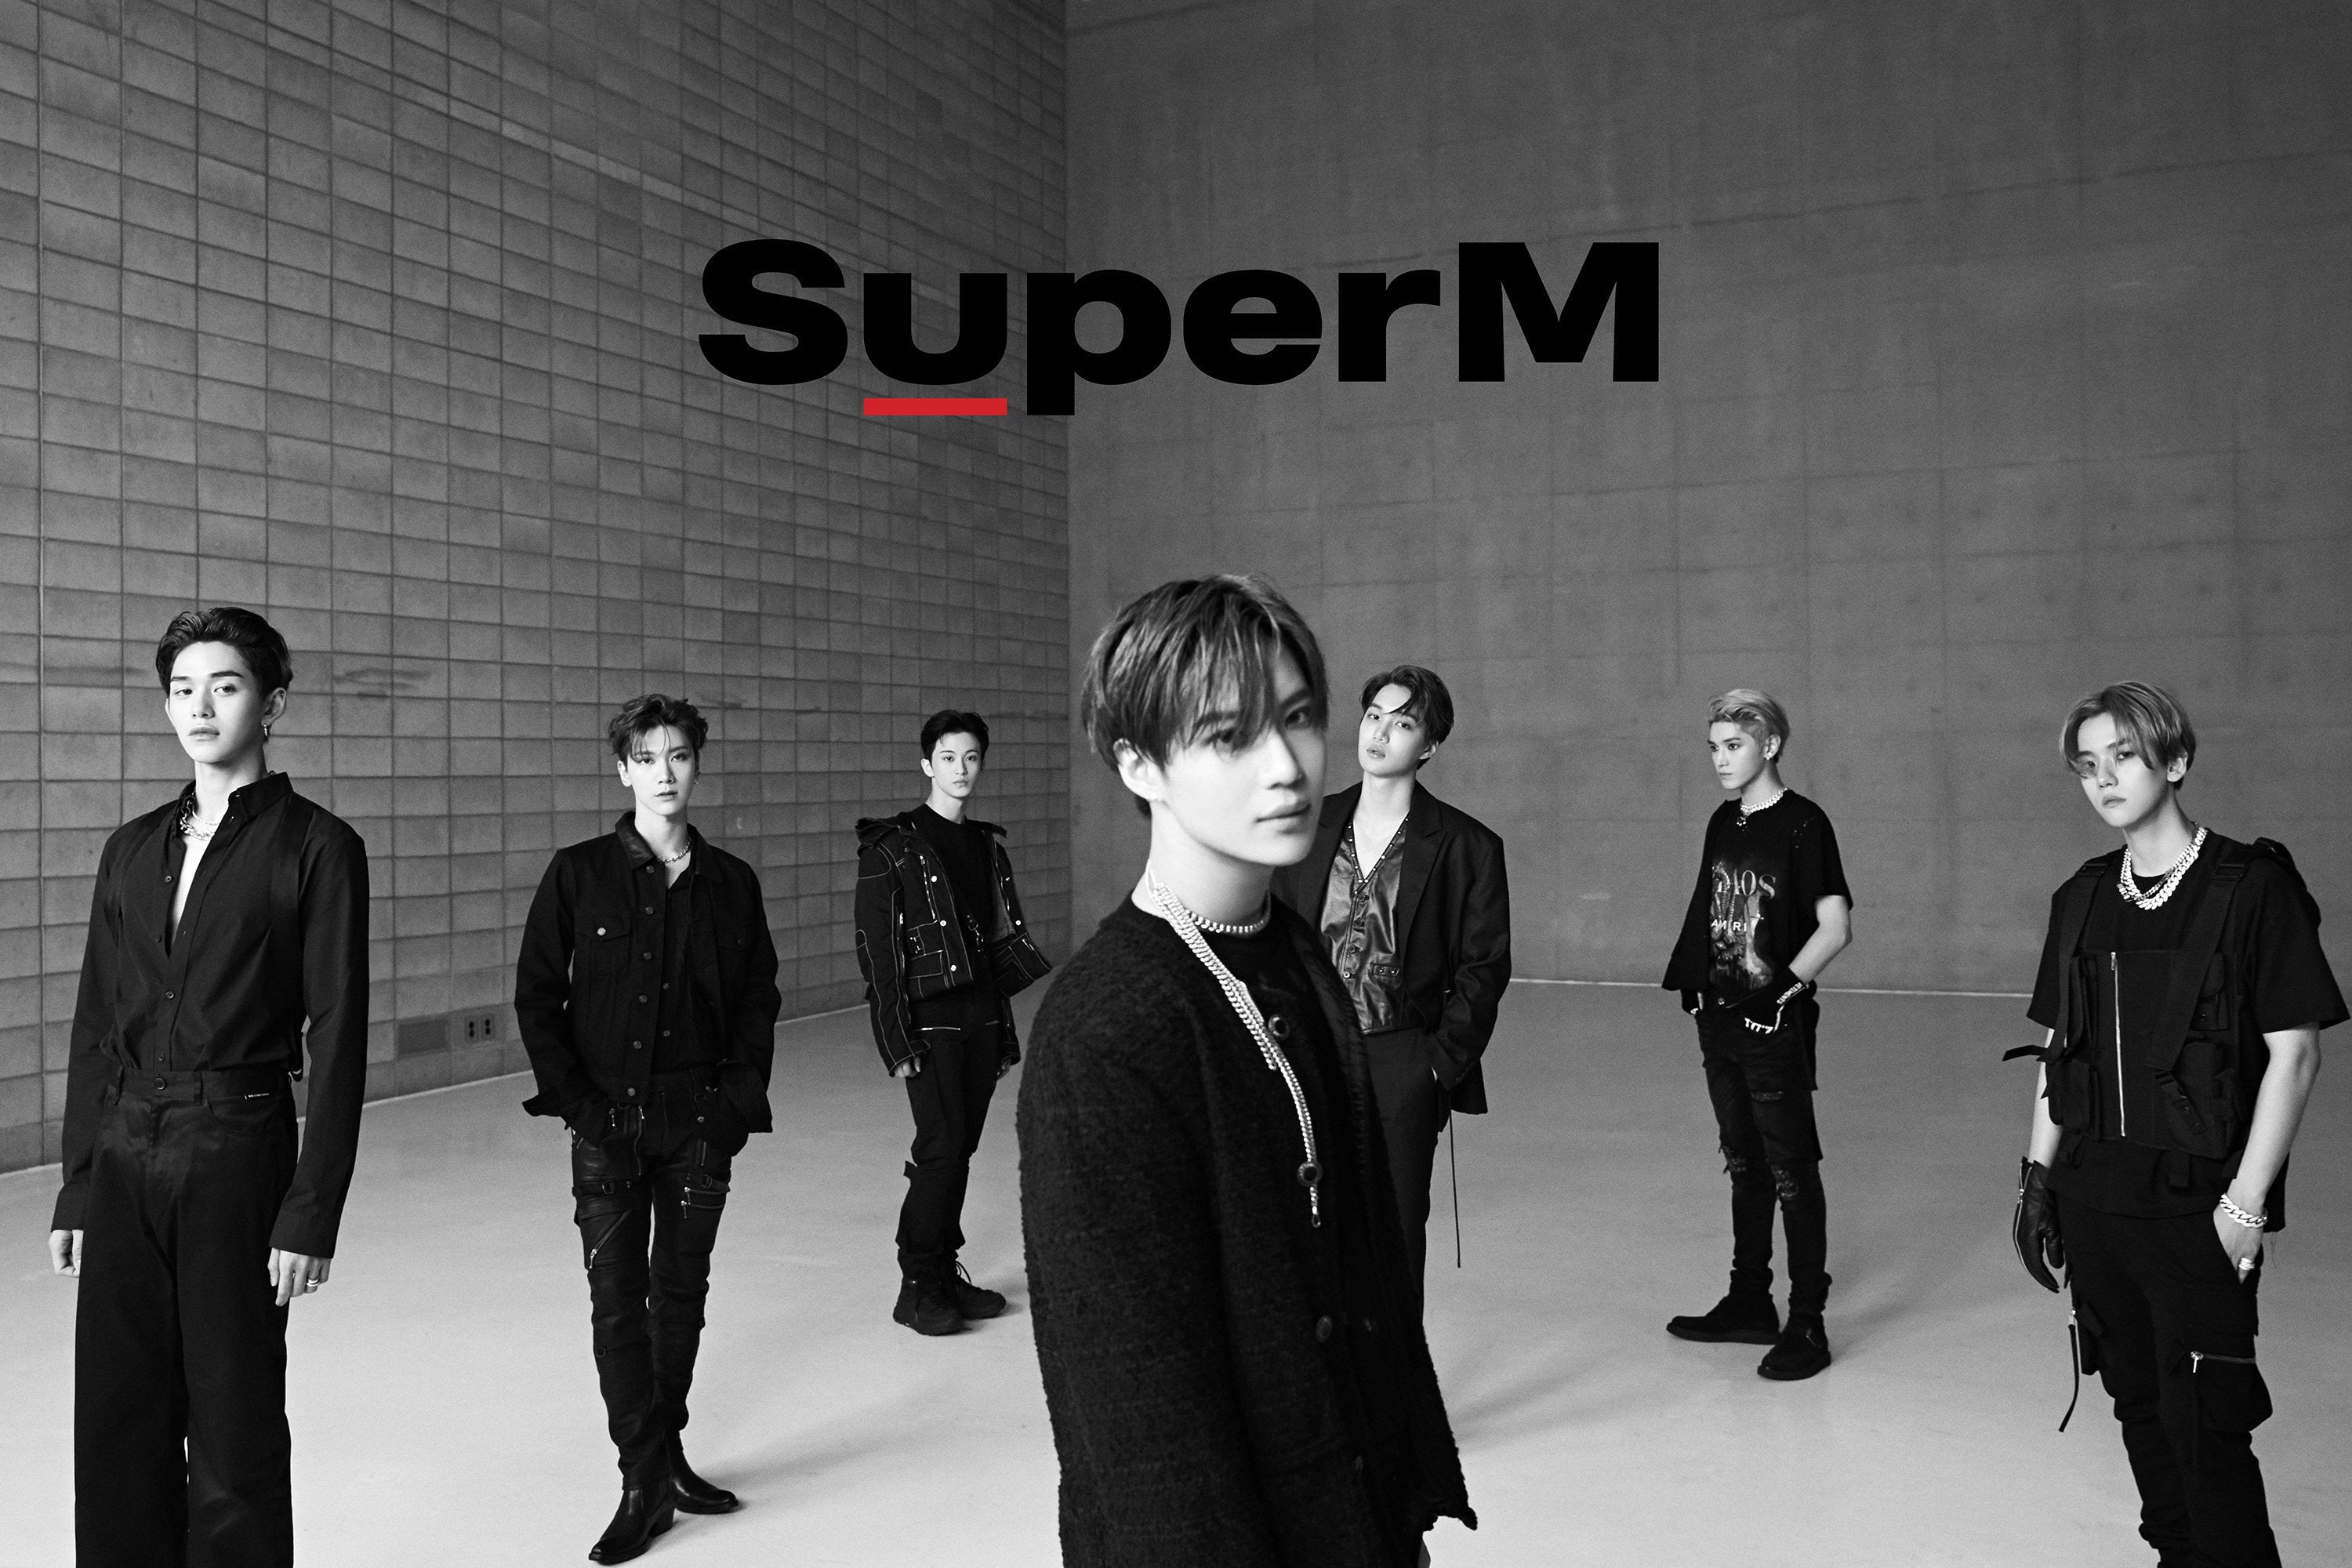 SuperM announce their official version 1 light stick